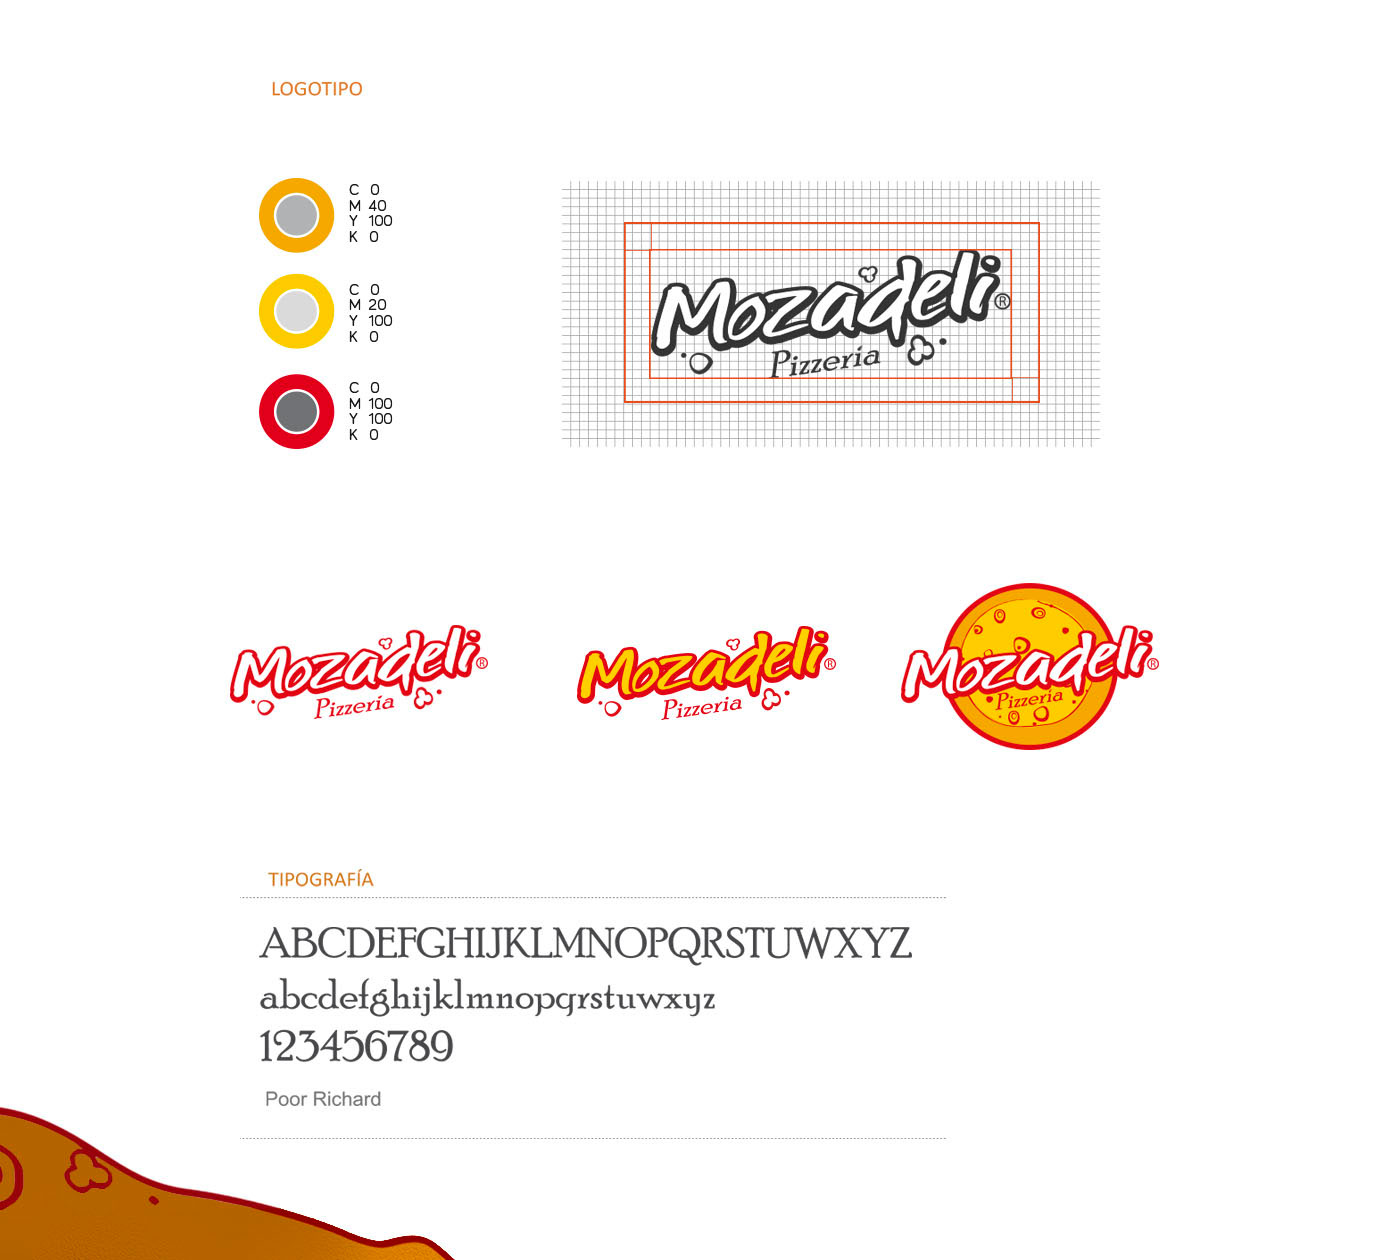 Logotipo marca diseño de producto brand logo Campaña mozadeli design Pizza peru